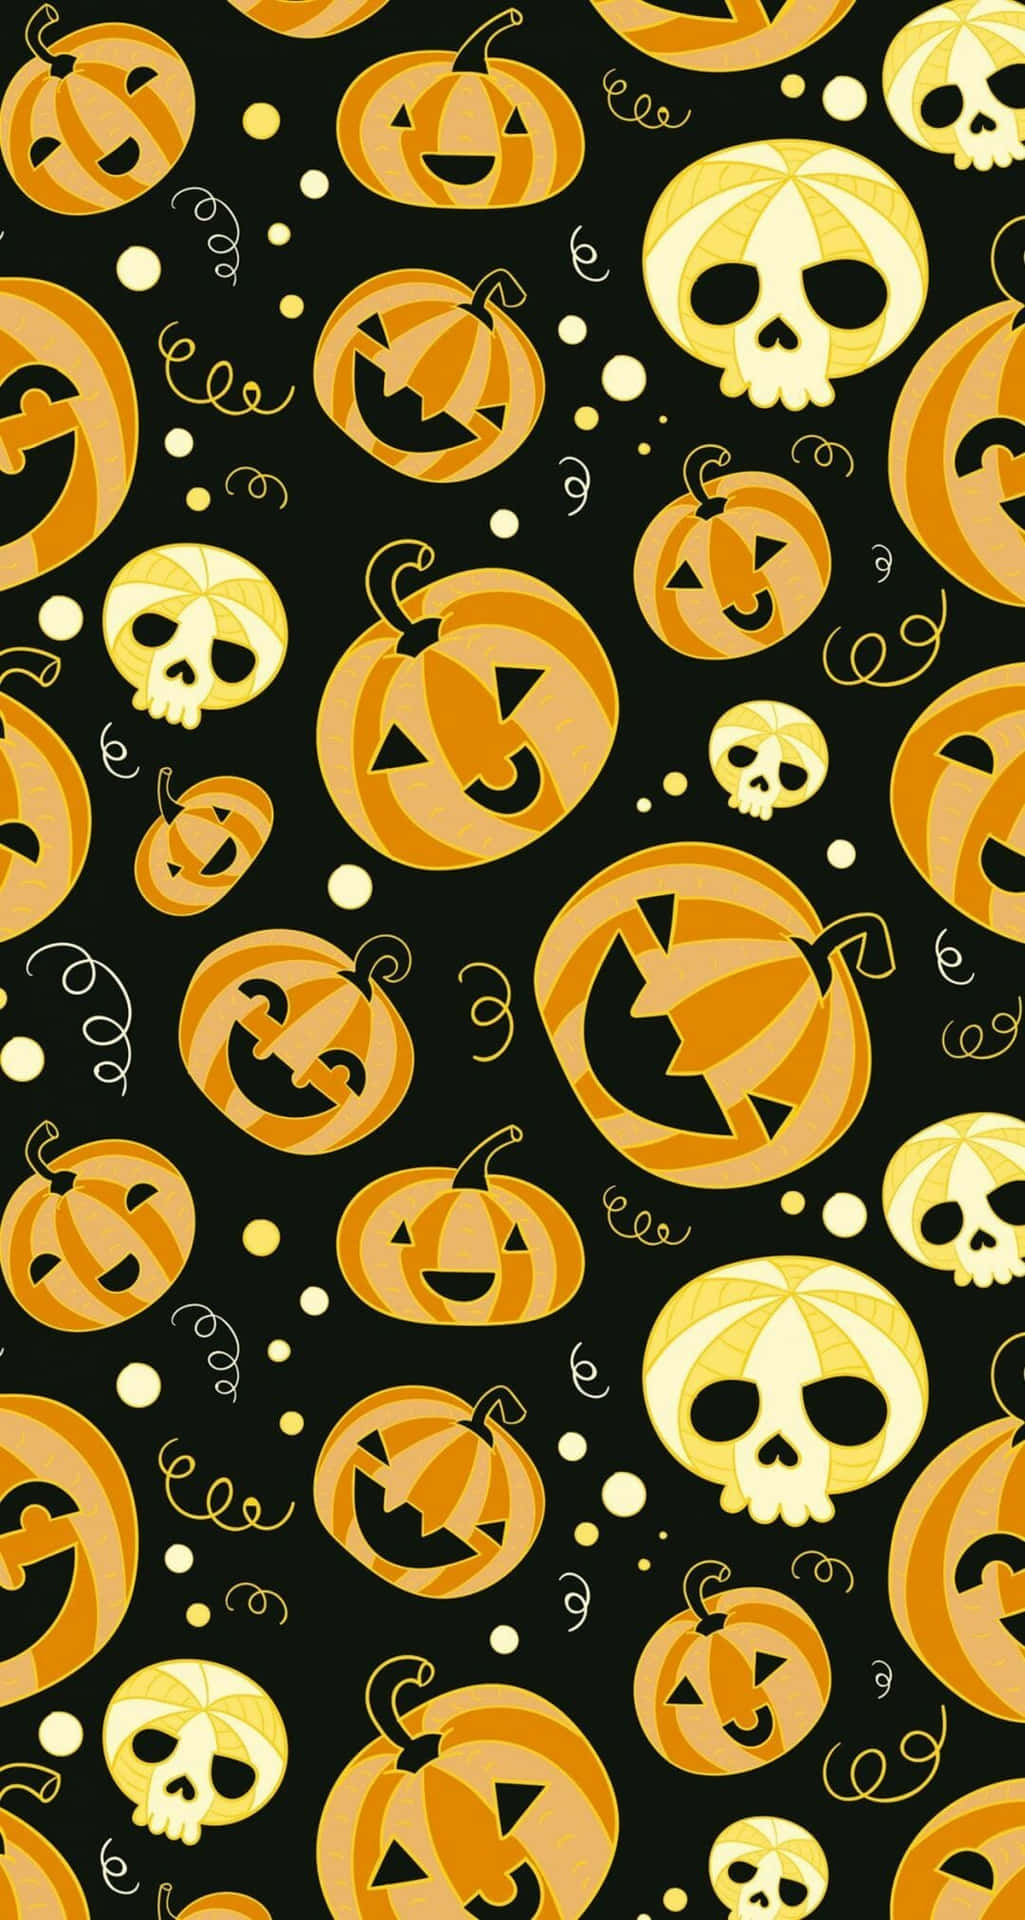 Skulls And Pumpkins For iPhone Halloween Background